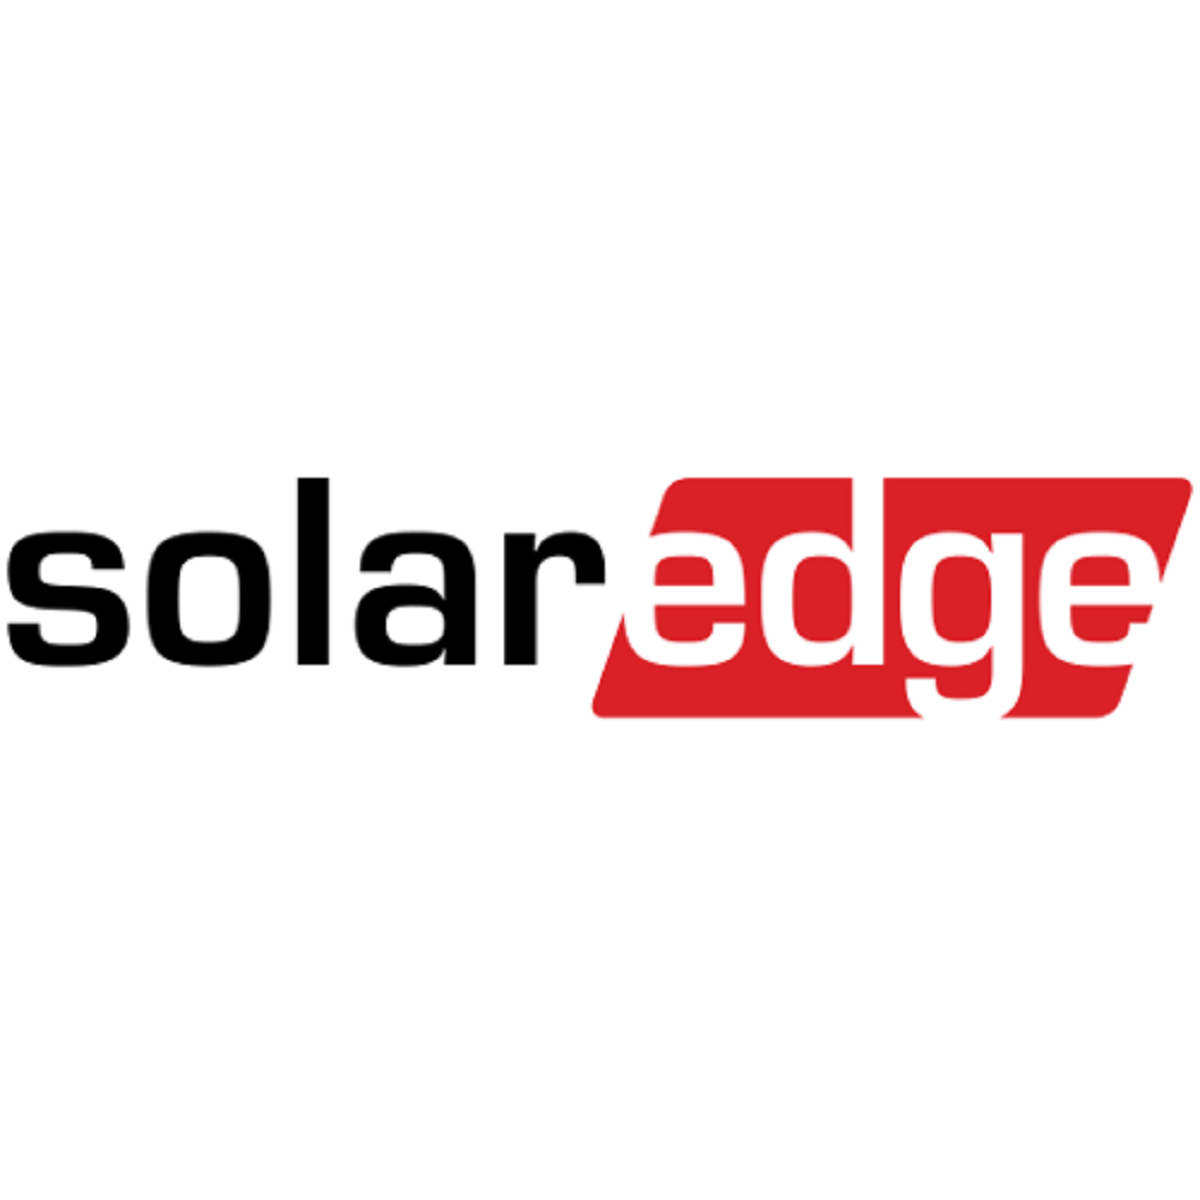 SolarEdge Rapid Shutdown Kit S2 5 wire pack w/ 1 memory card 